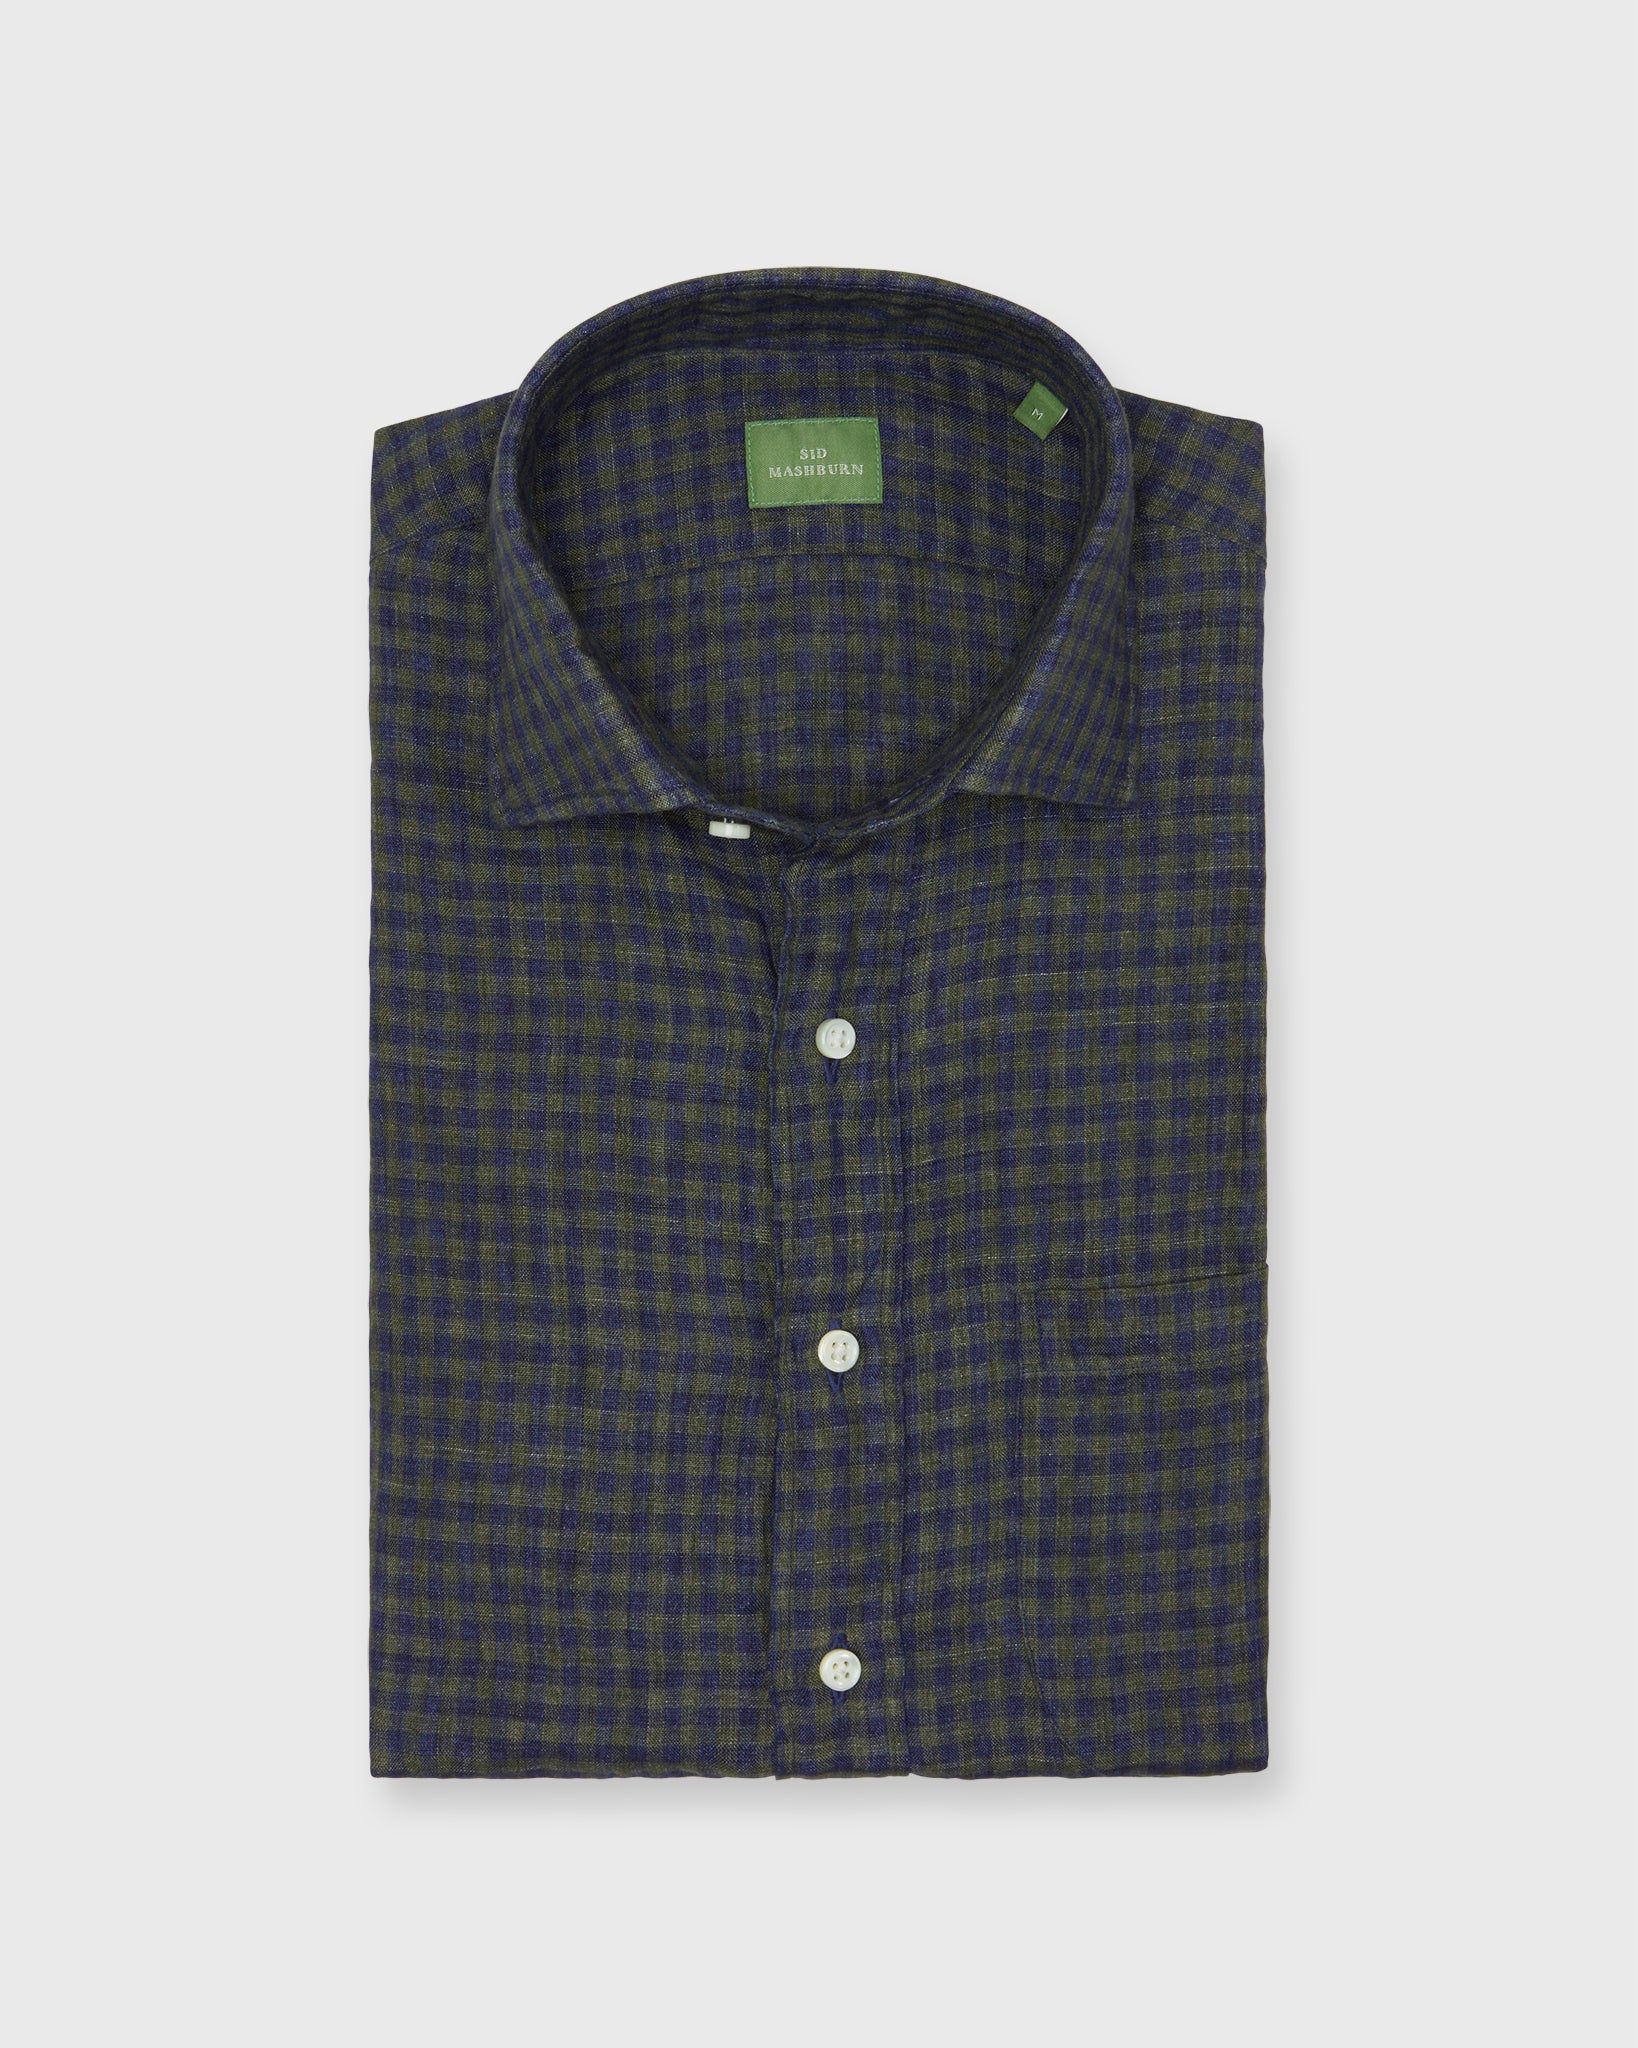 Spread Collar Sport Shirt in Olive/Navy Gingham Linen